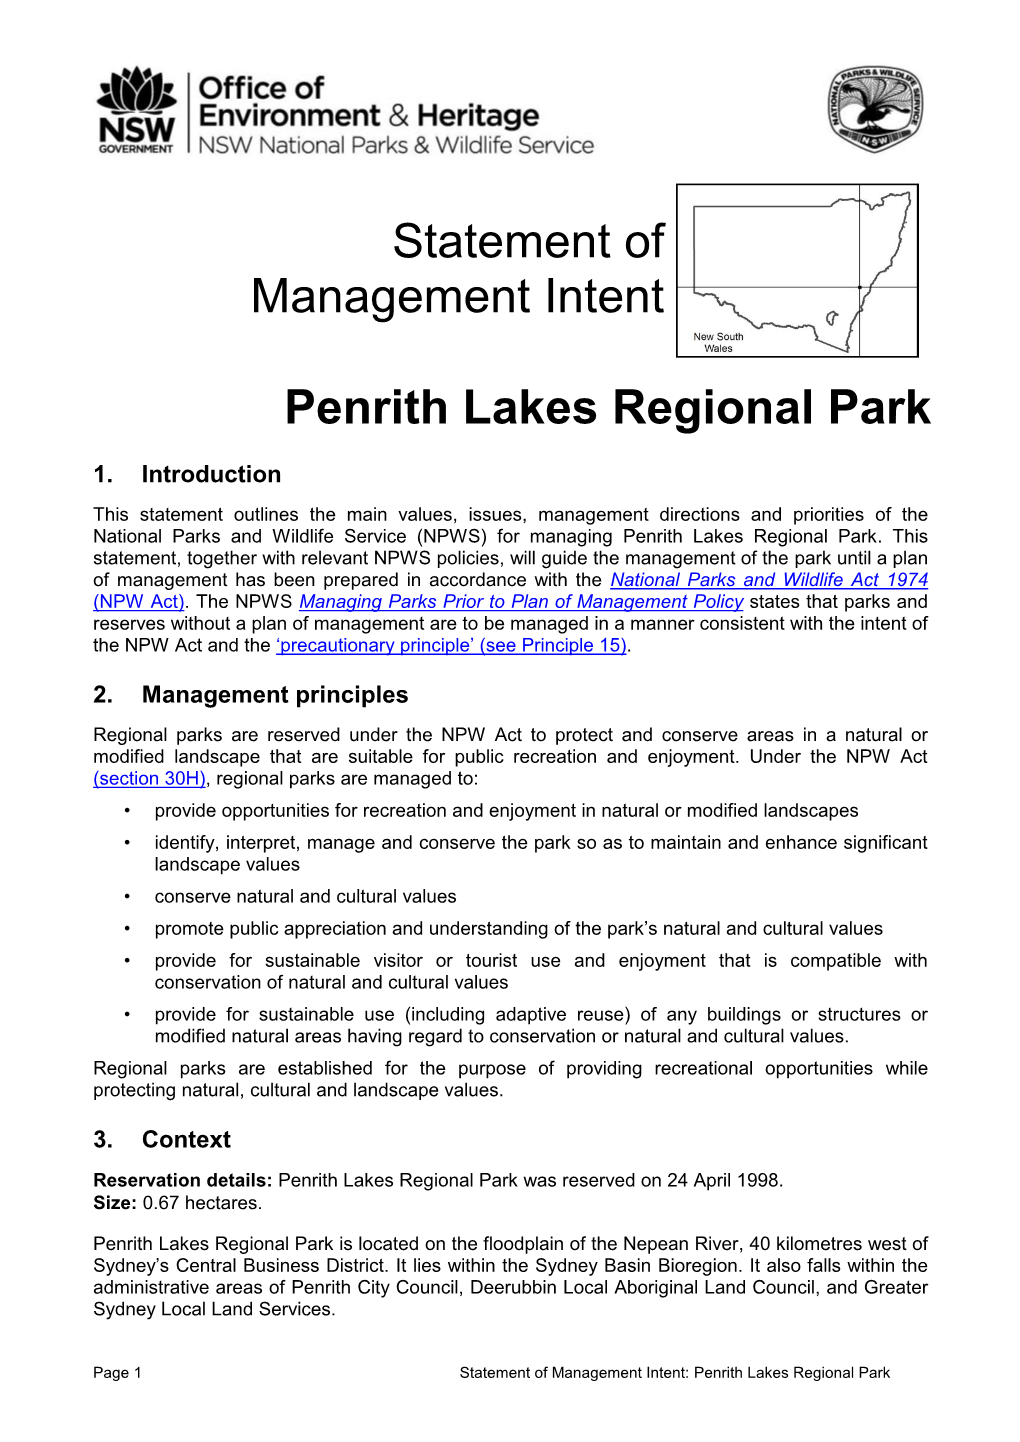 Statement of Management Intent: Penrith Lakes Regional Park